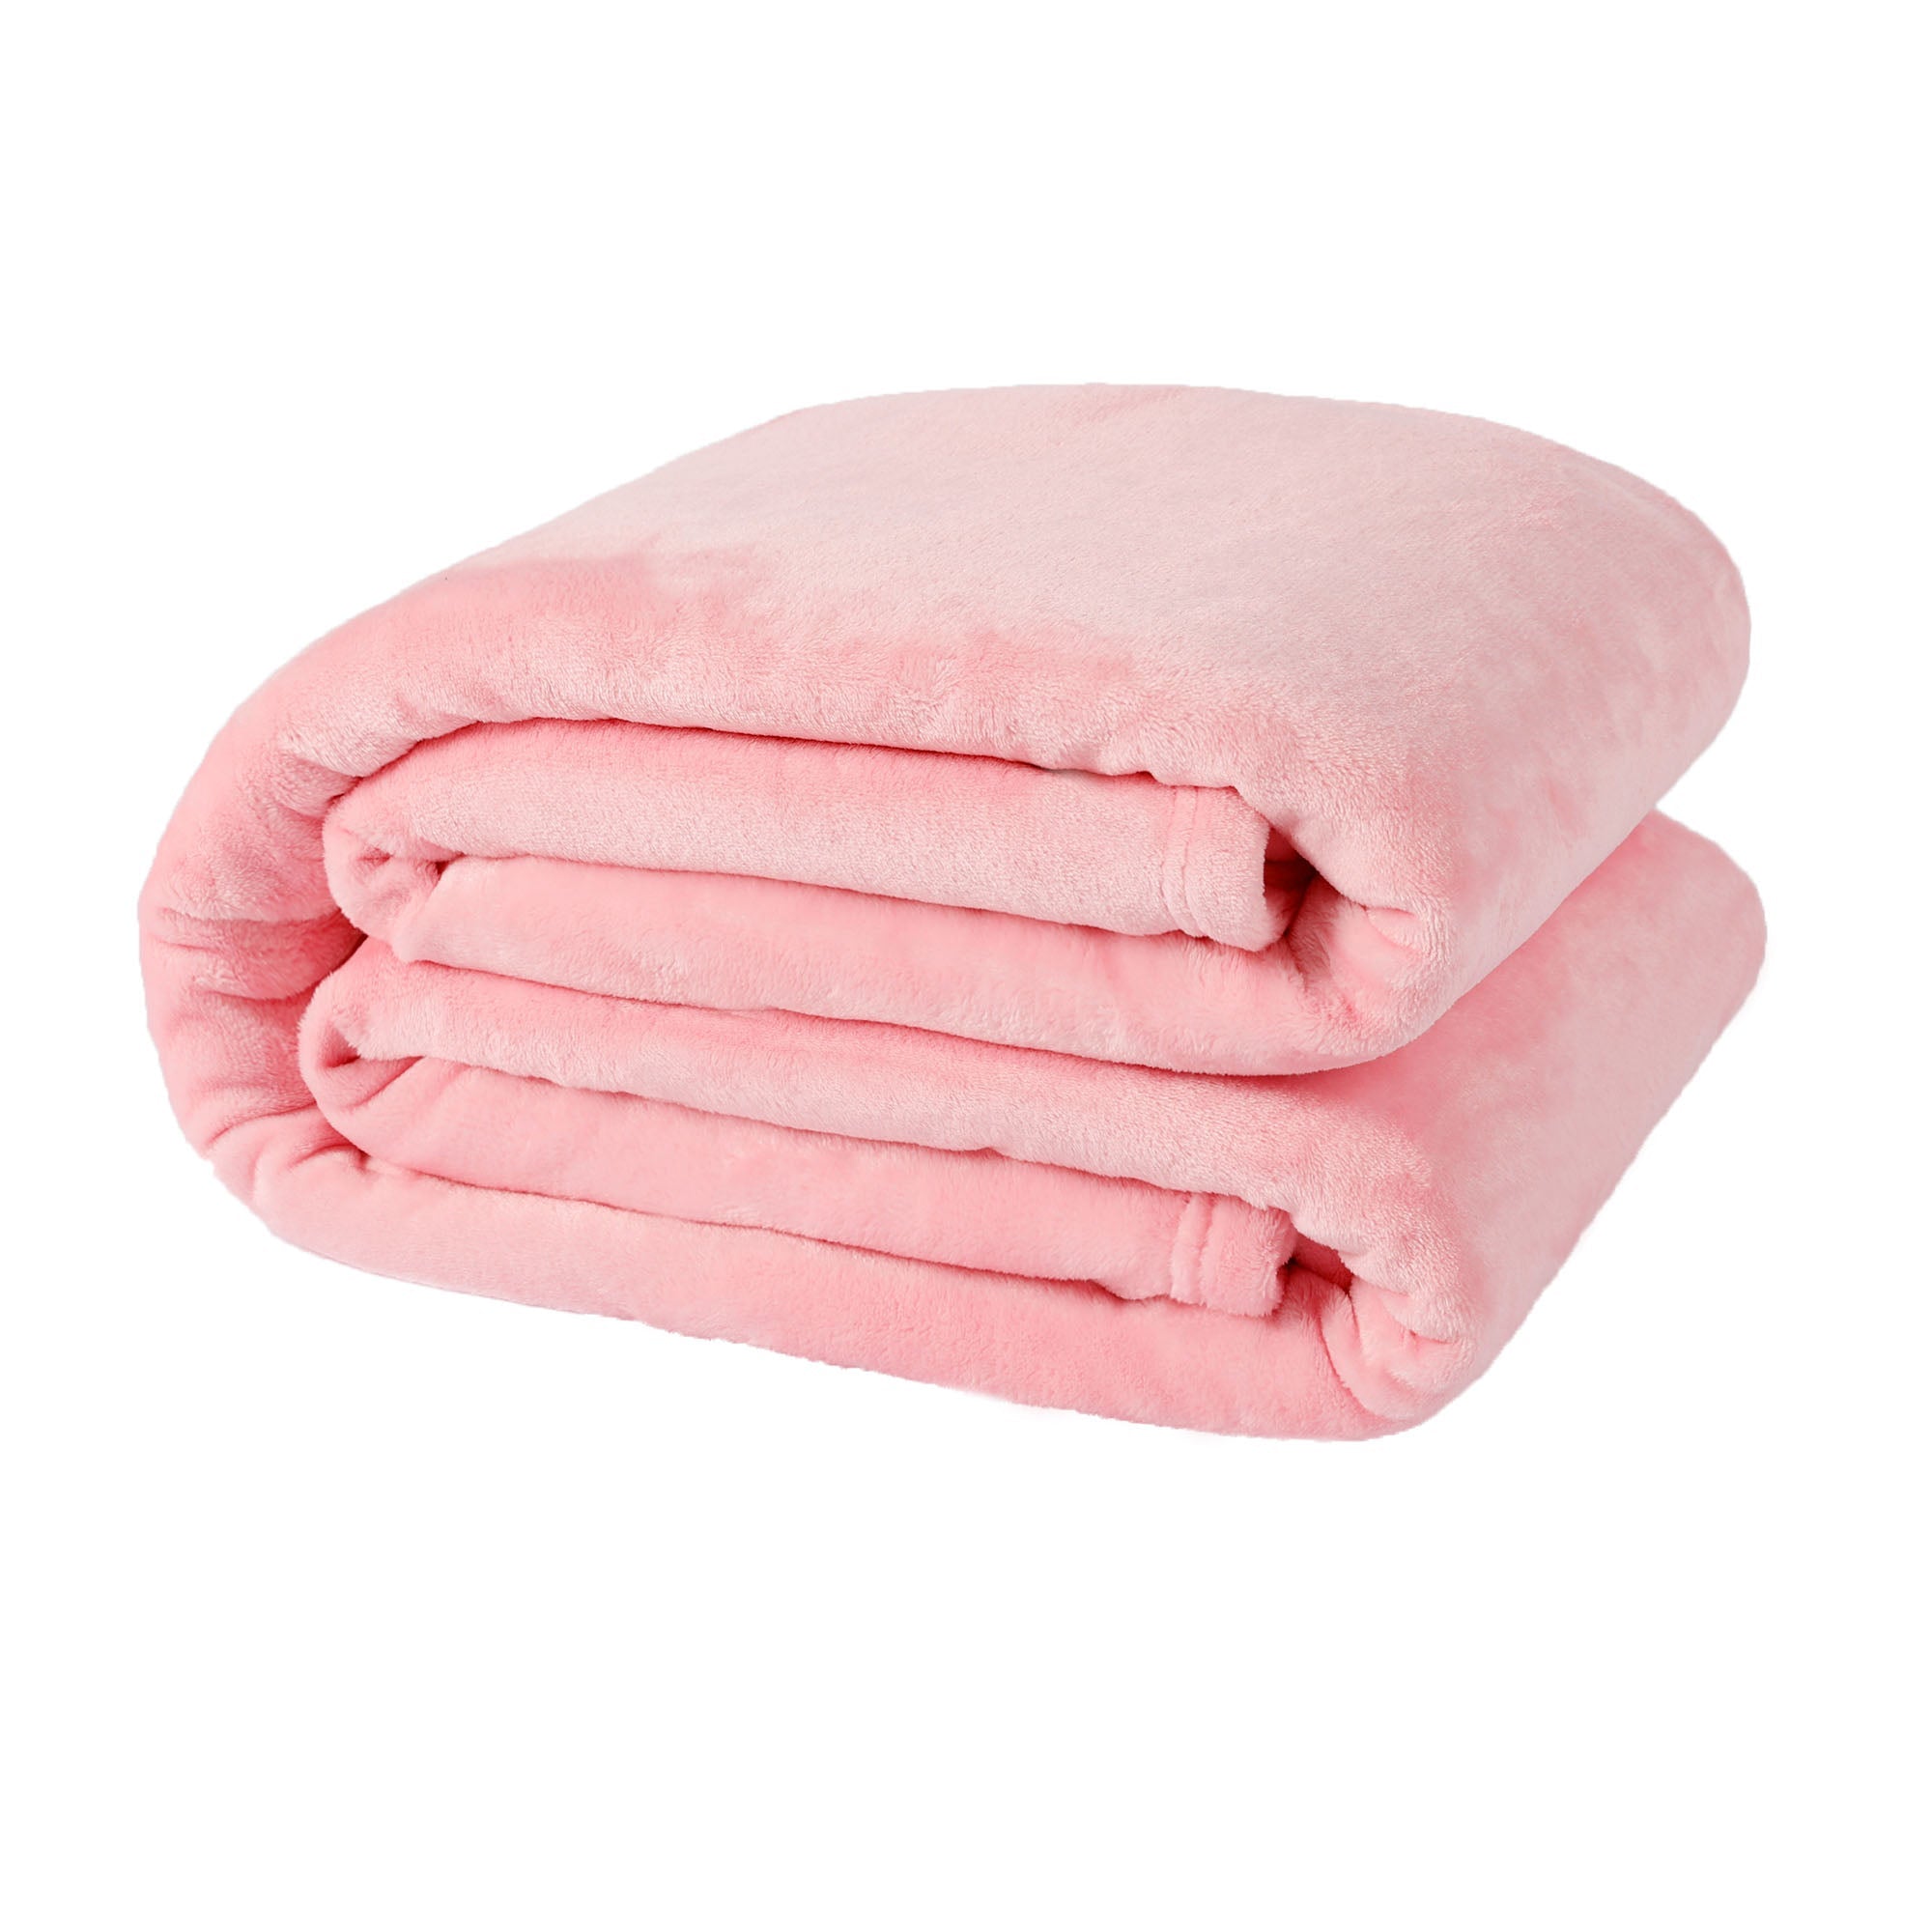 Throw Blankets Pink - NANPIPERHOME